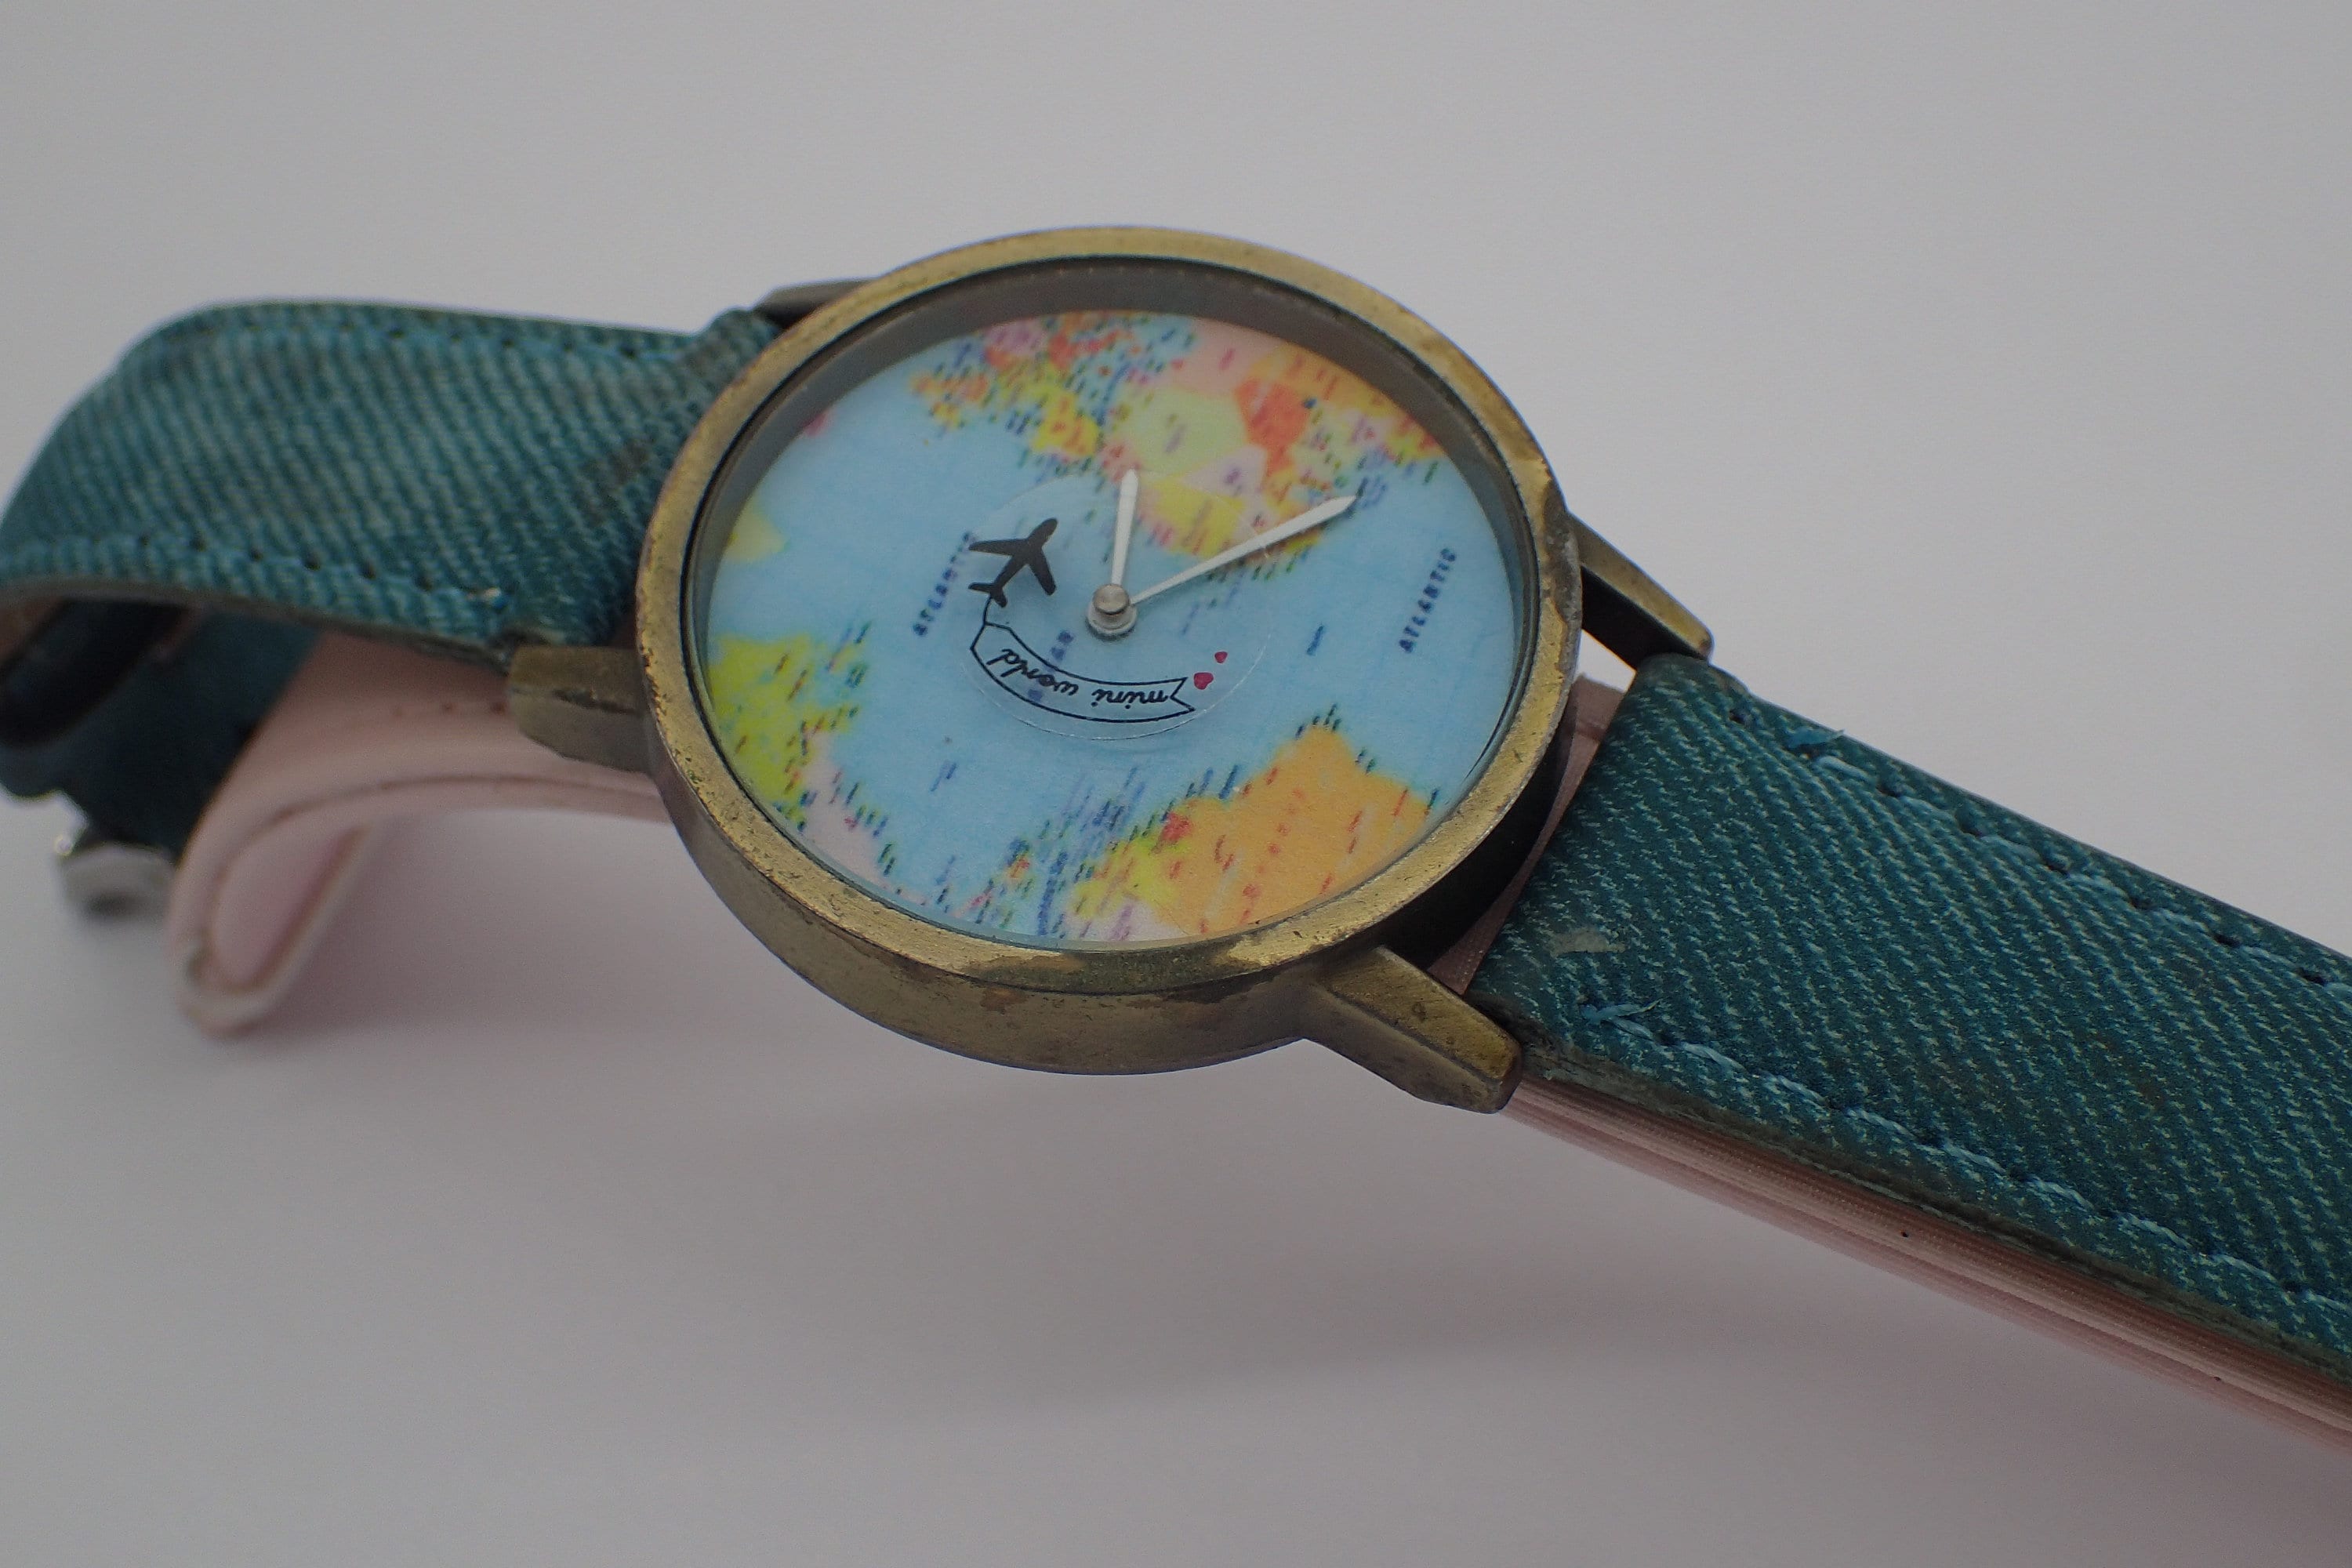 Soviet Watch casino With Poker Face, Poker Watch, Vintage Watch, Casino  Watch 